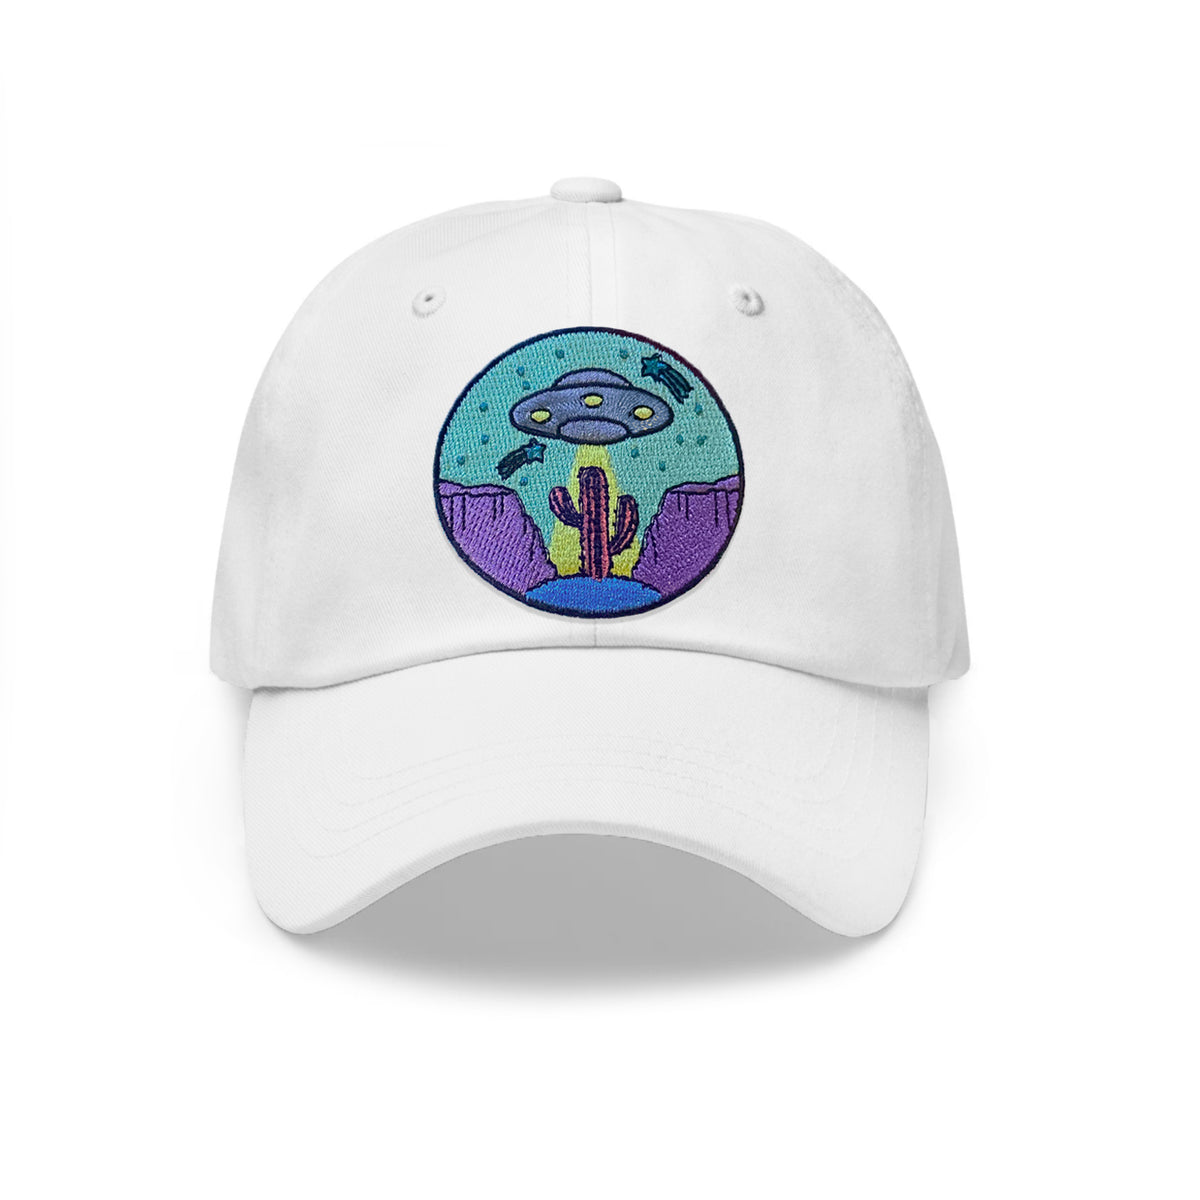 Cactus UFO Alien Low Profile Hat